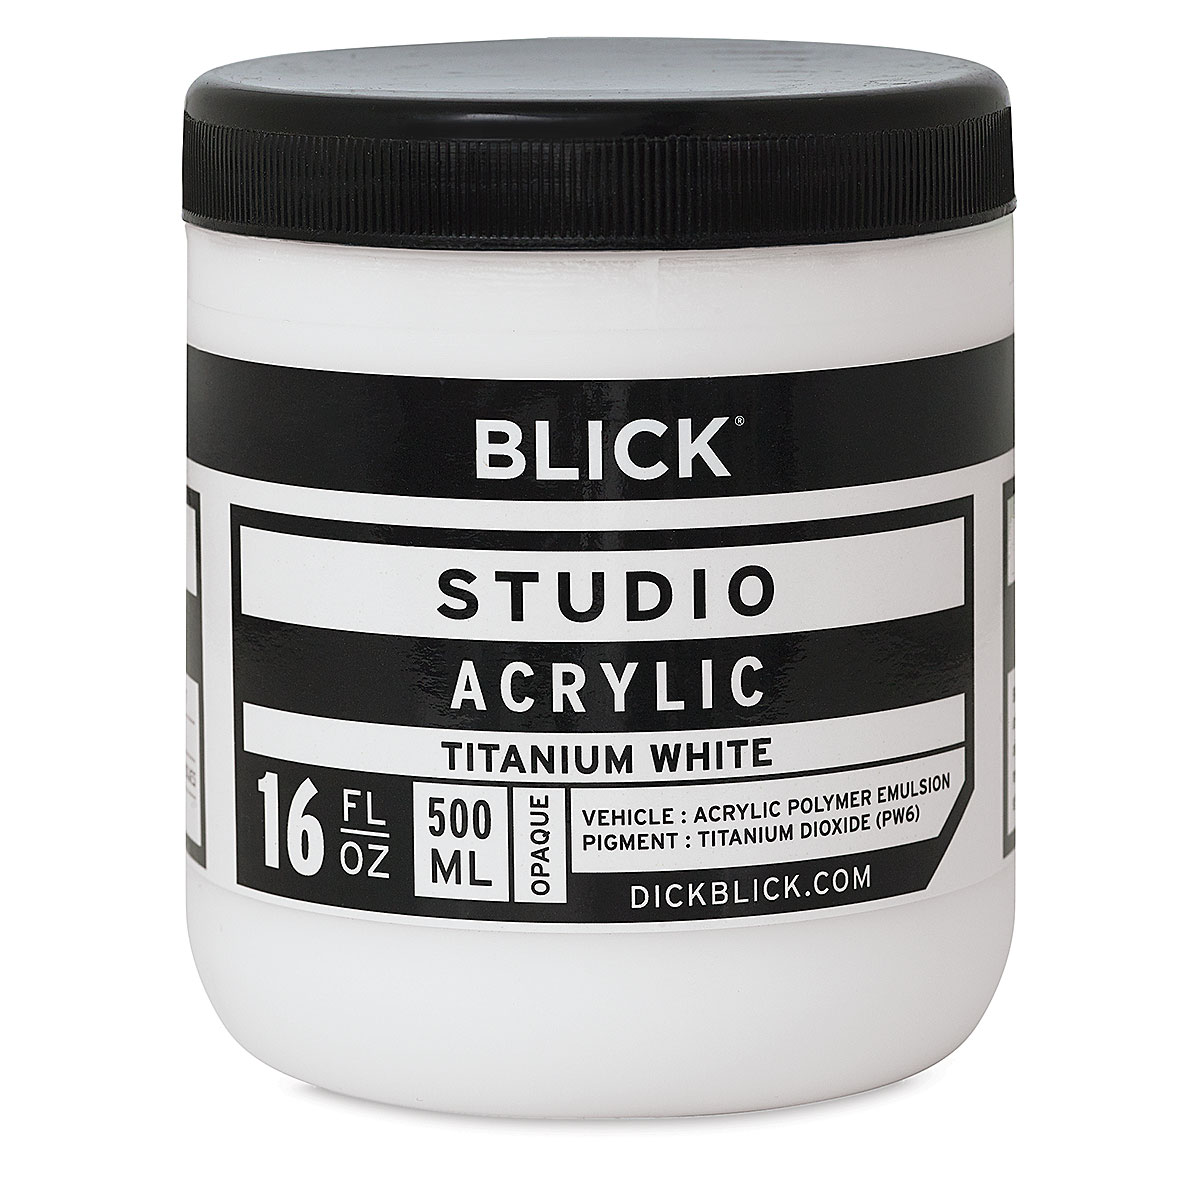 Blick Studio Acrylic Paints and Sets